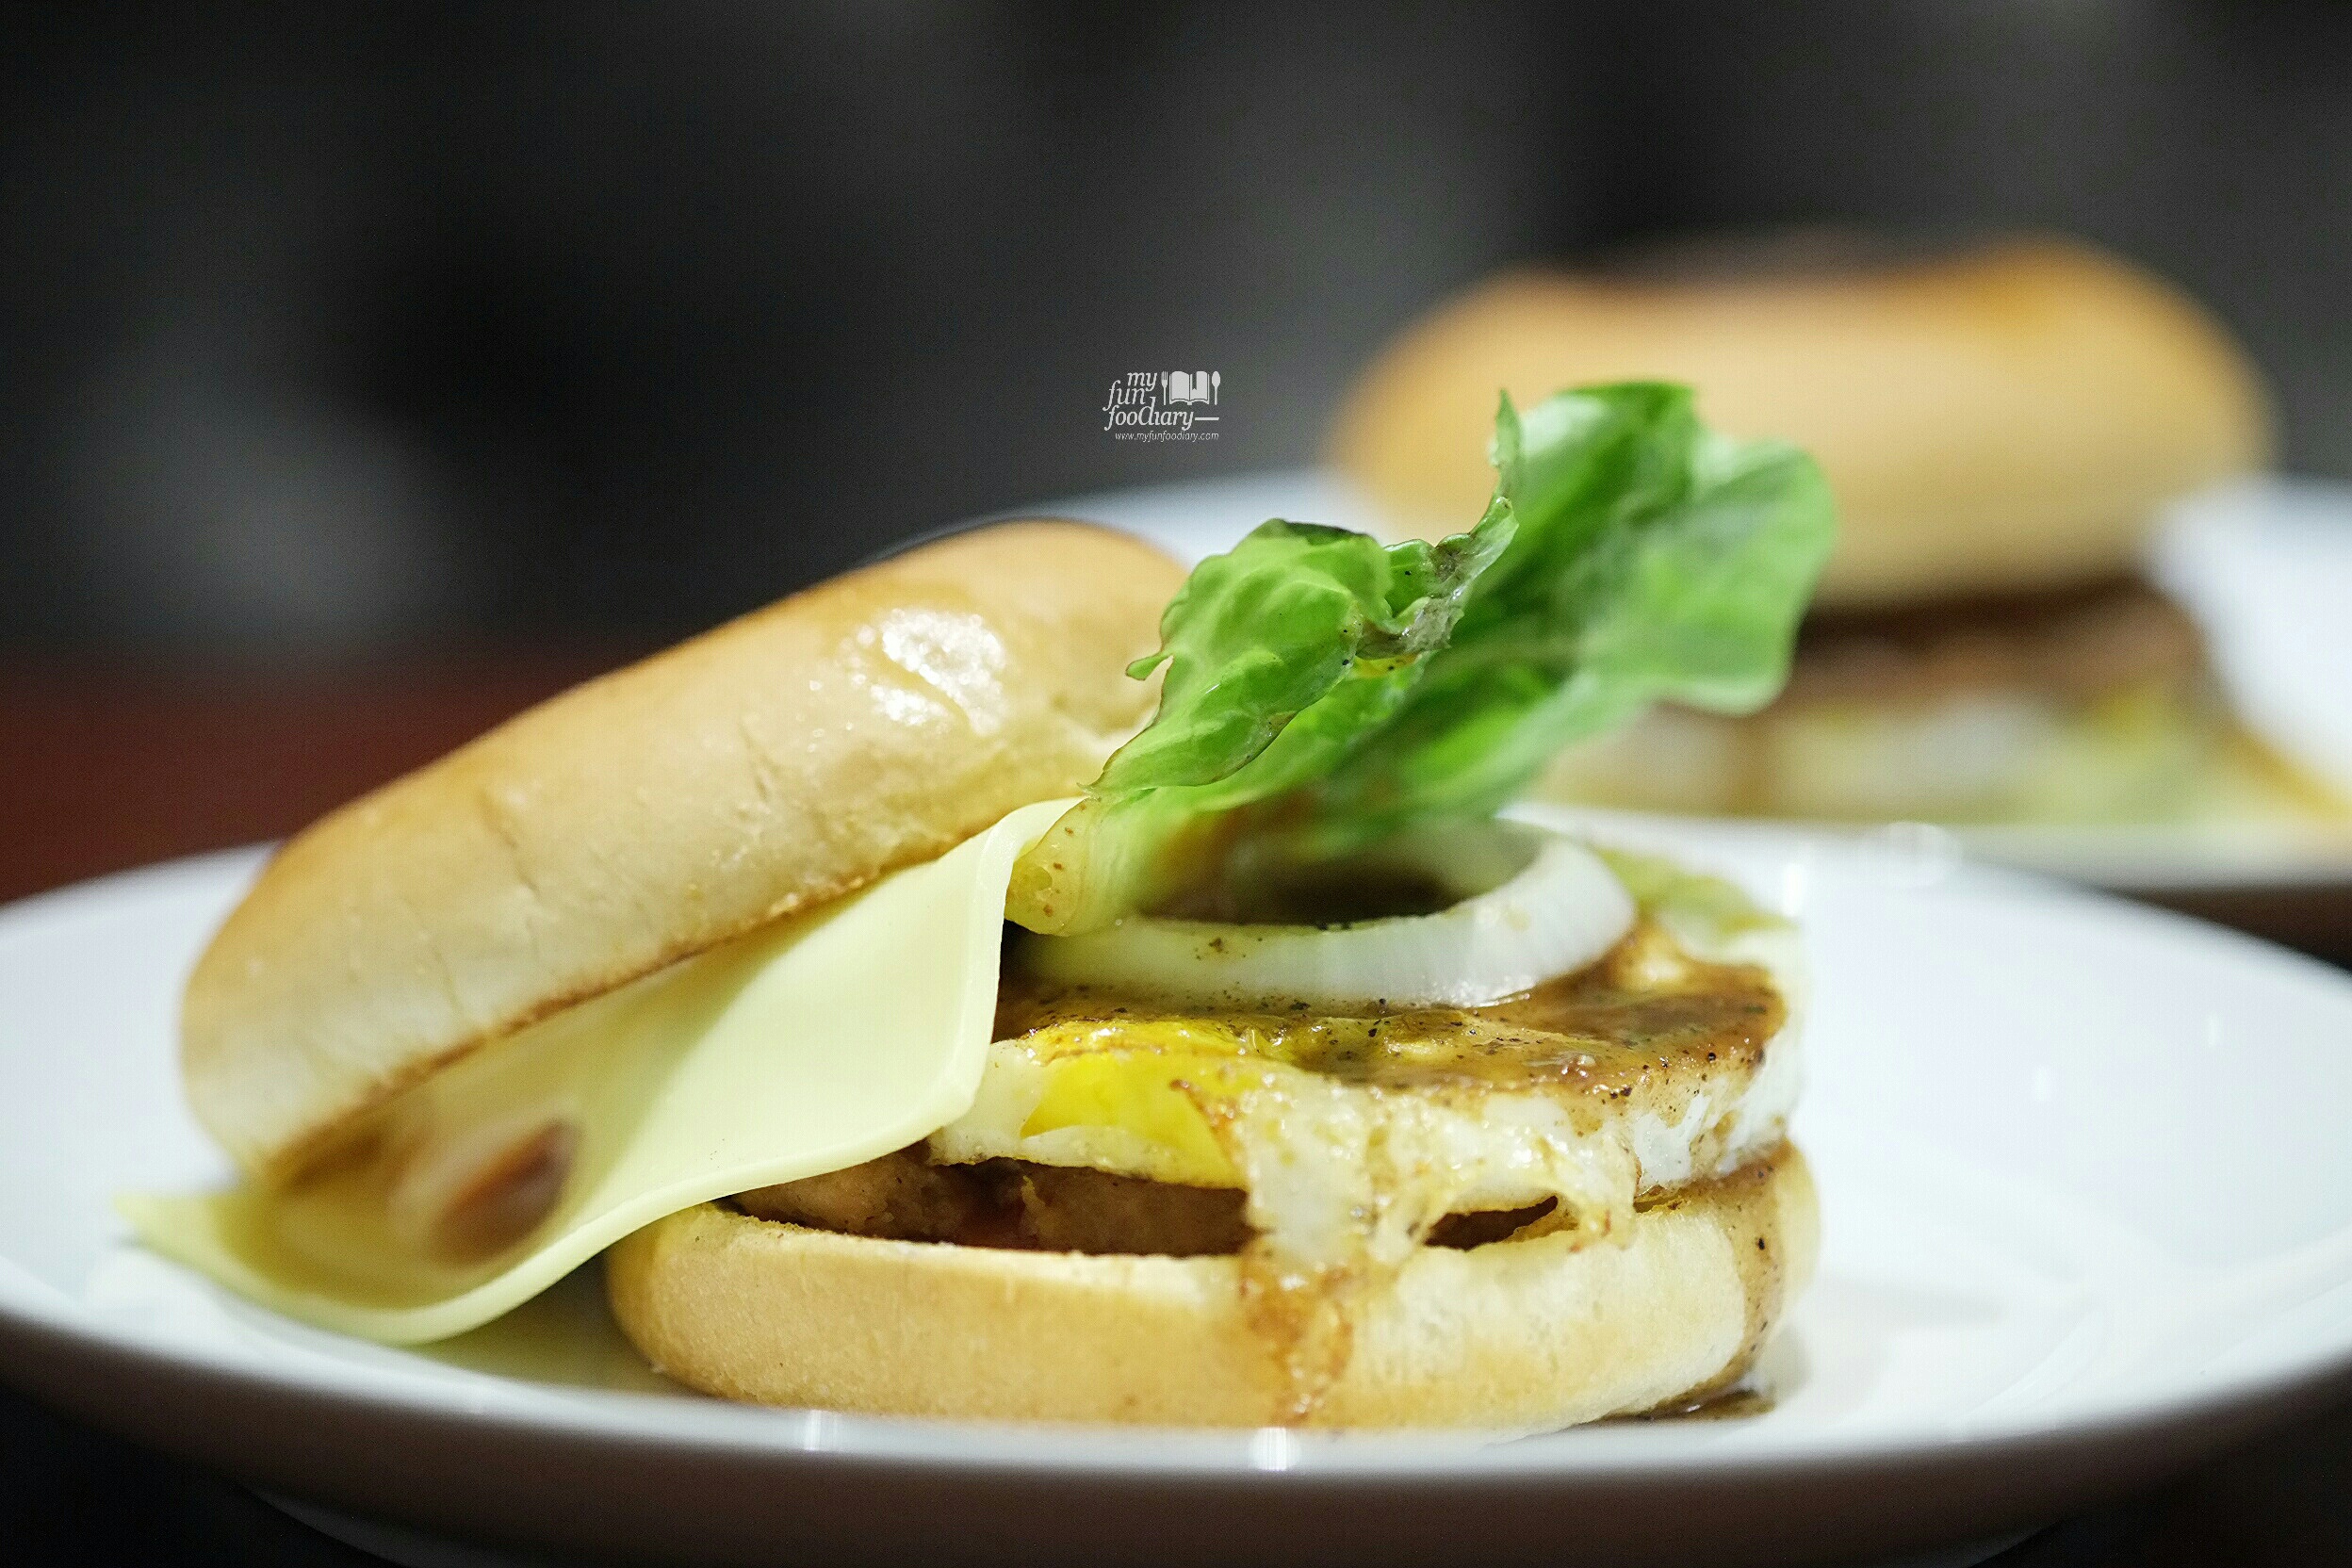 Sasebo Burger at KOBE by Shabu2 House by Myfunfoodiary